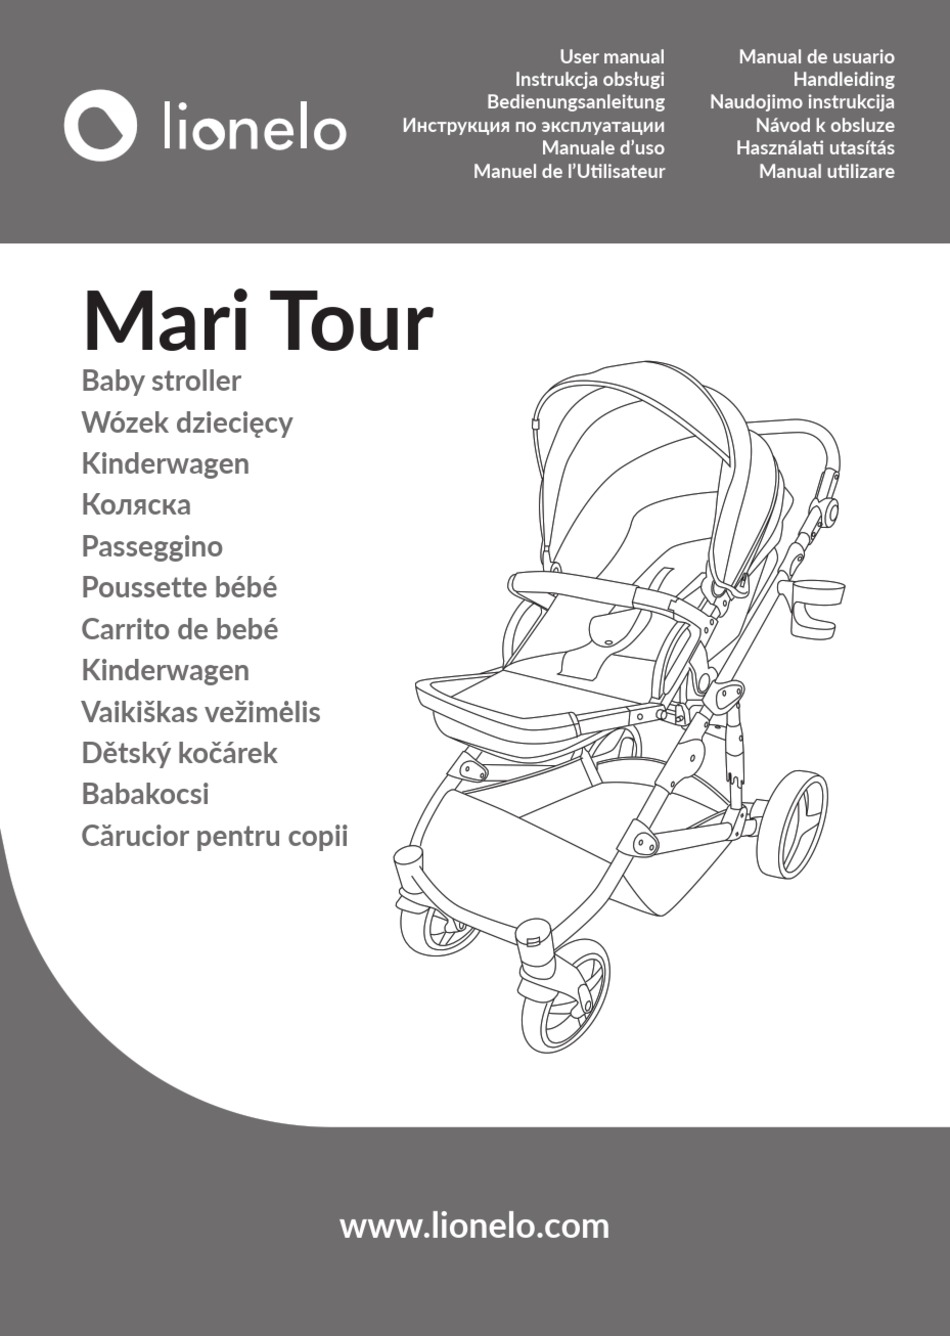 LIONELO MARI TOUR USER MANUAL Pdf Download | ManualsLib